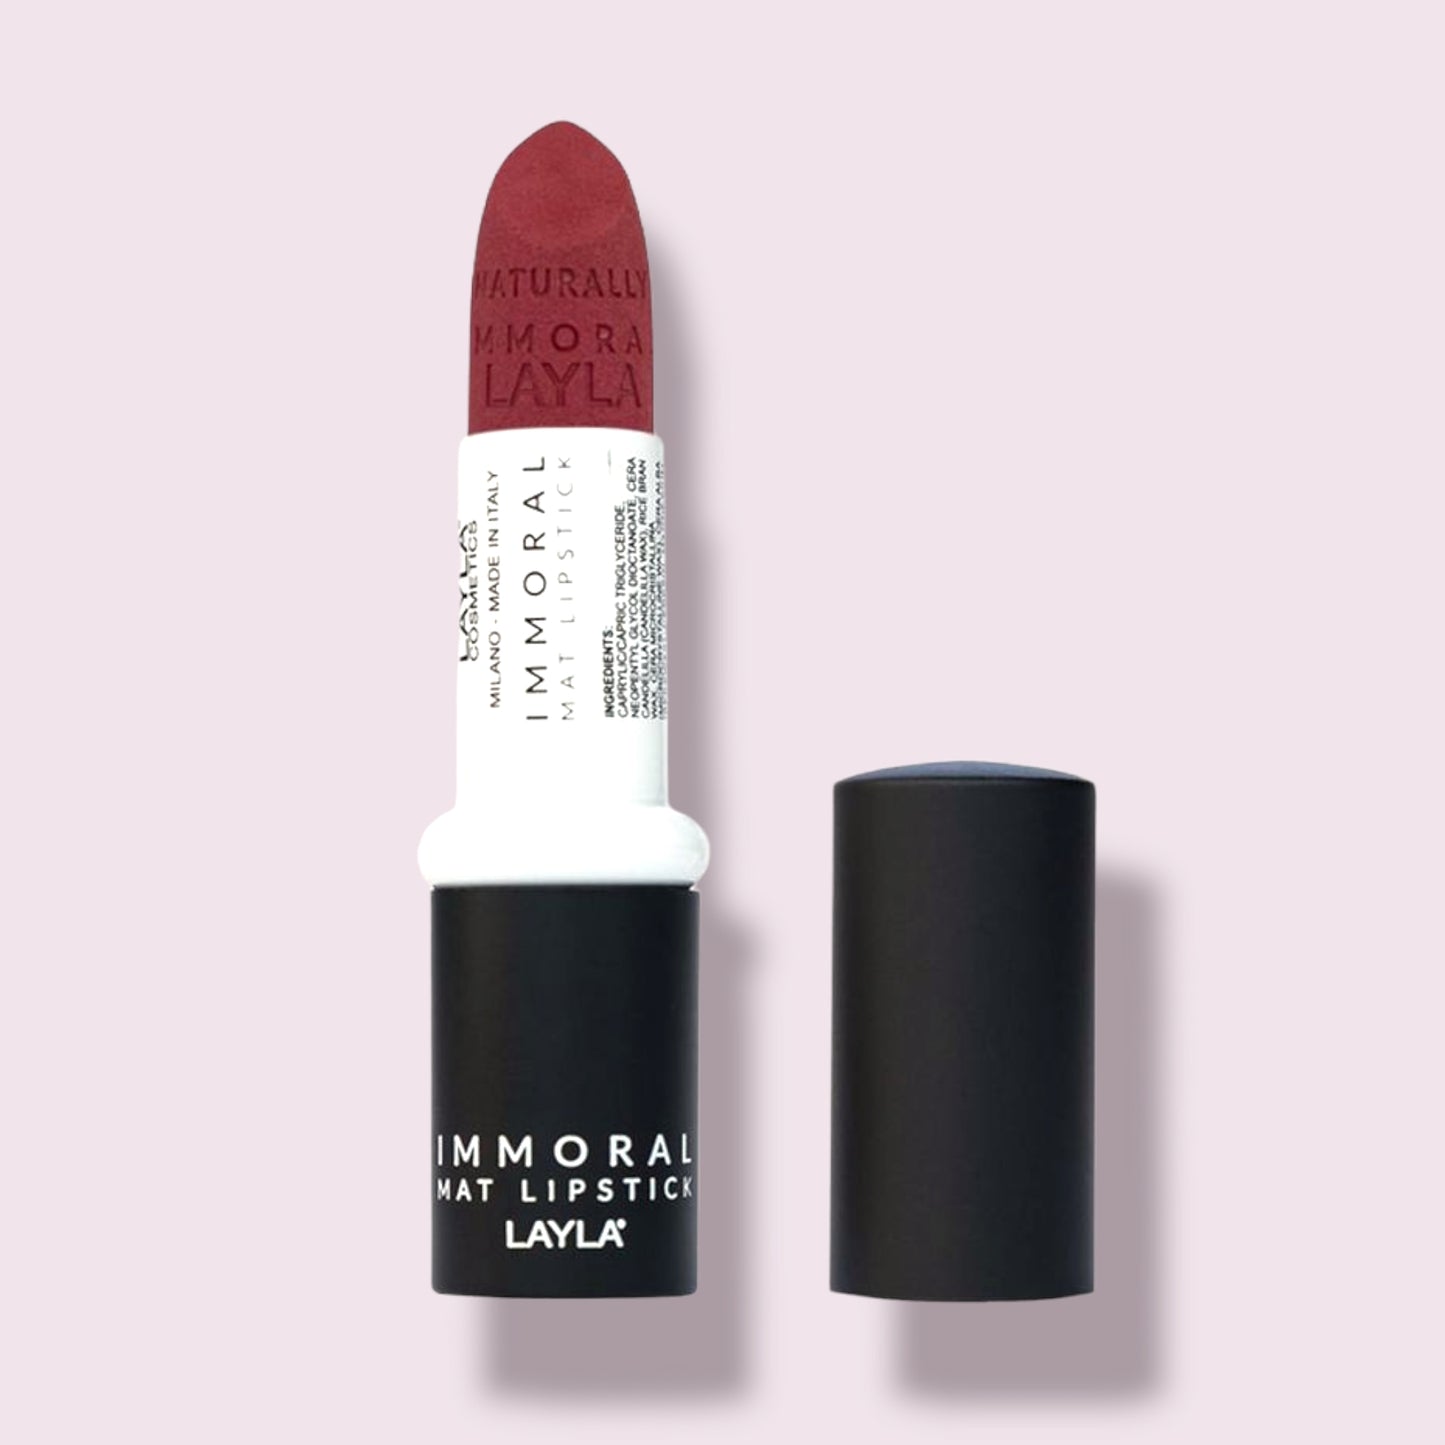 Immoral Mat Lipstick 15